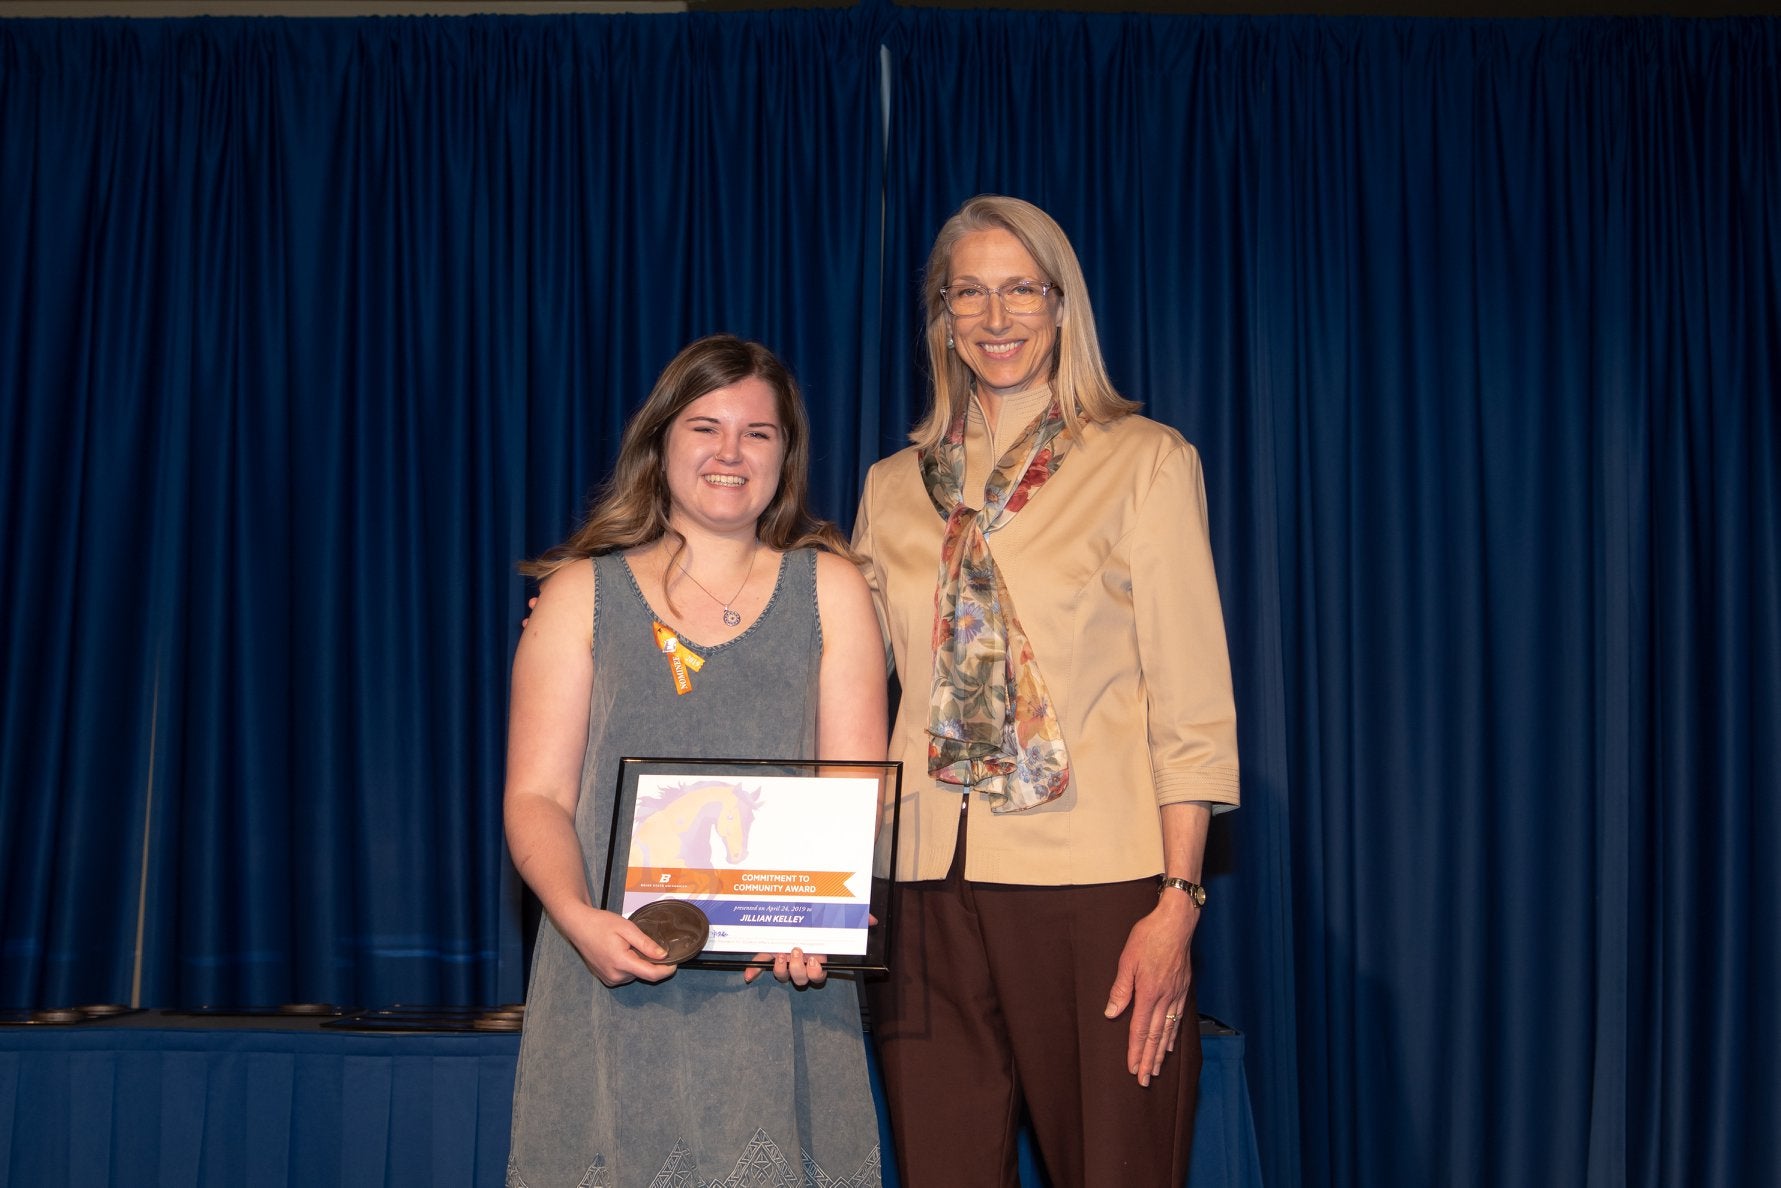 Jillian Kelley with her award